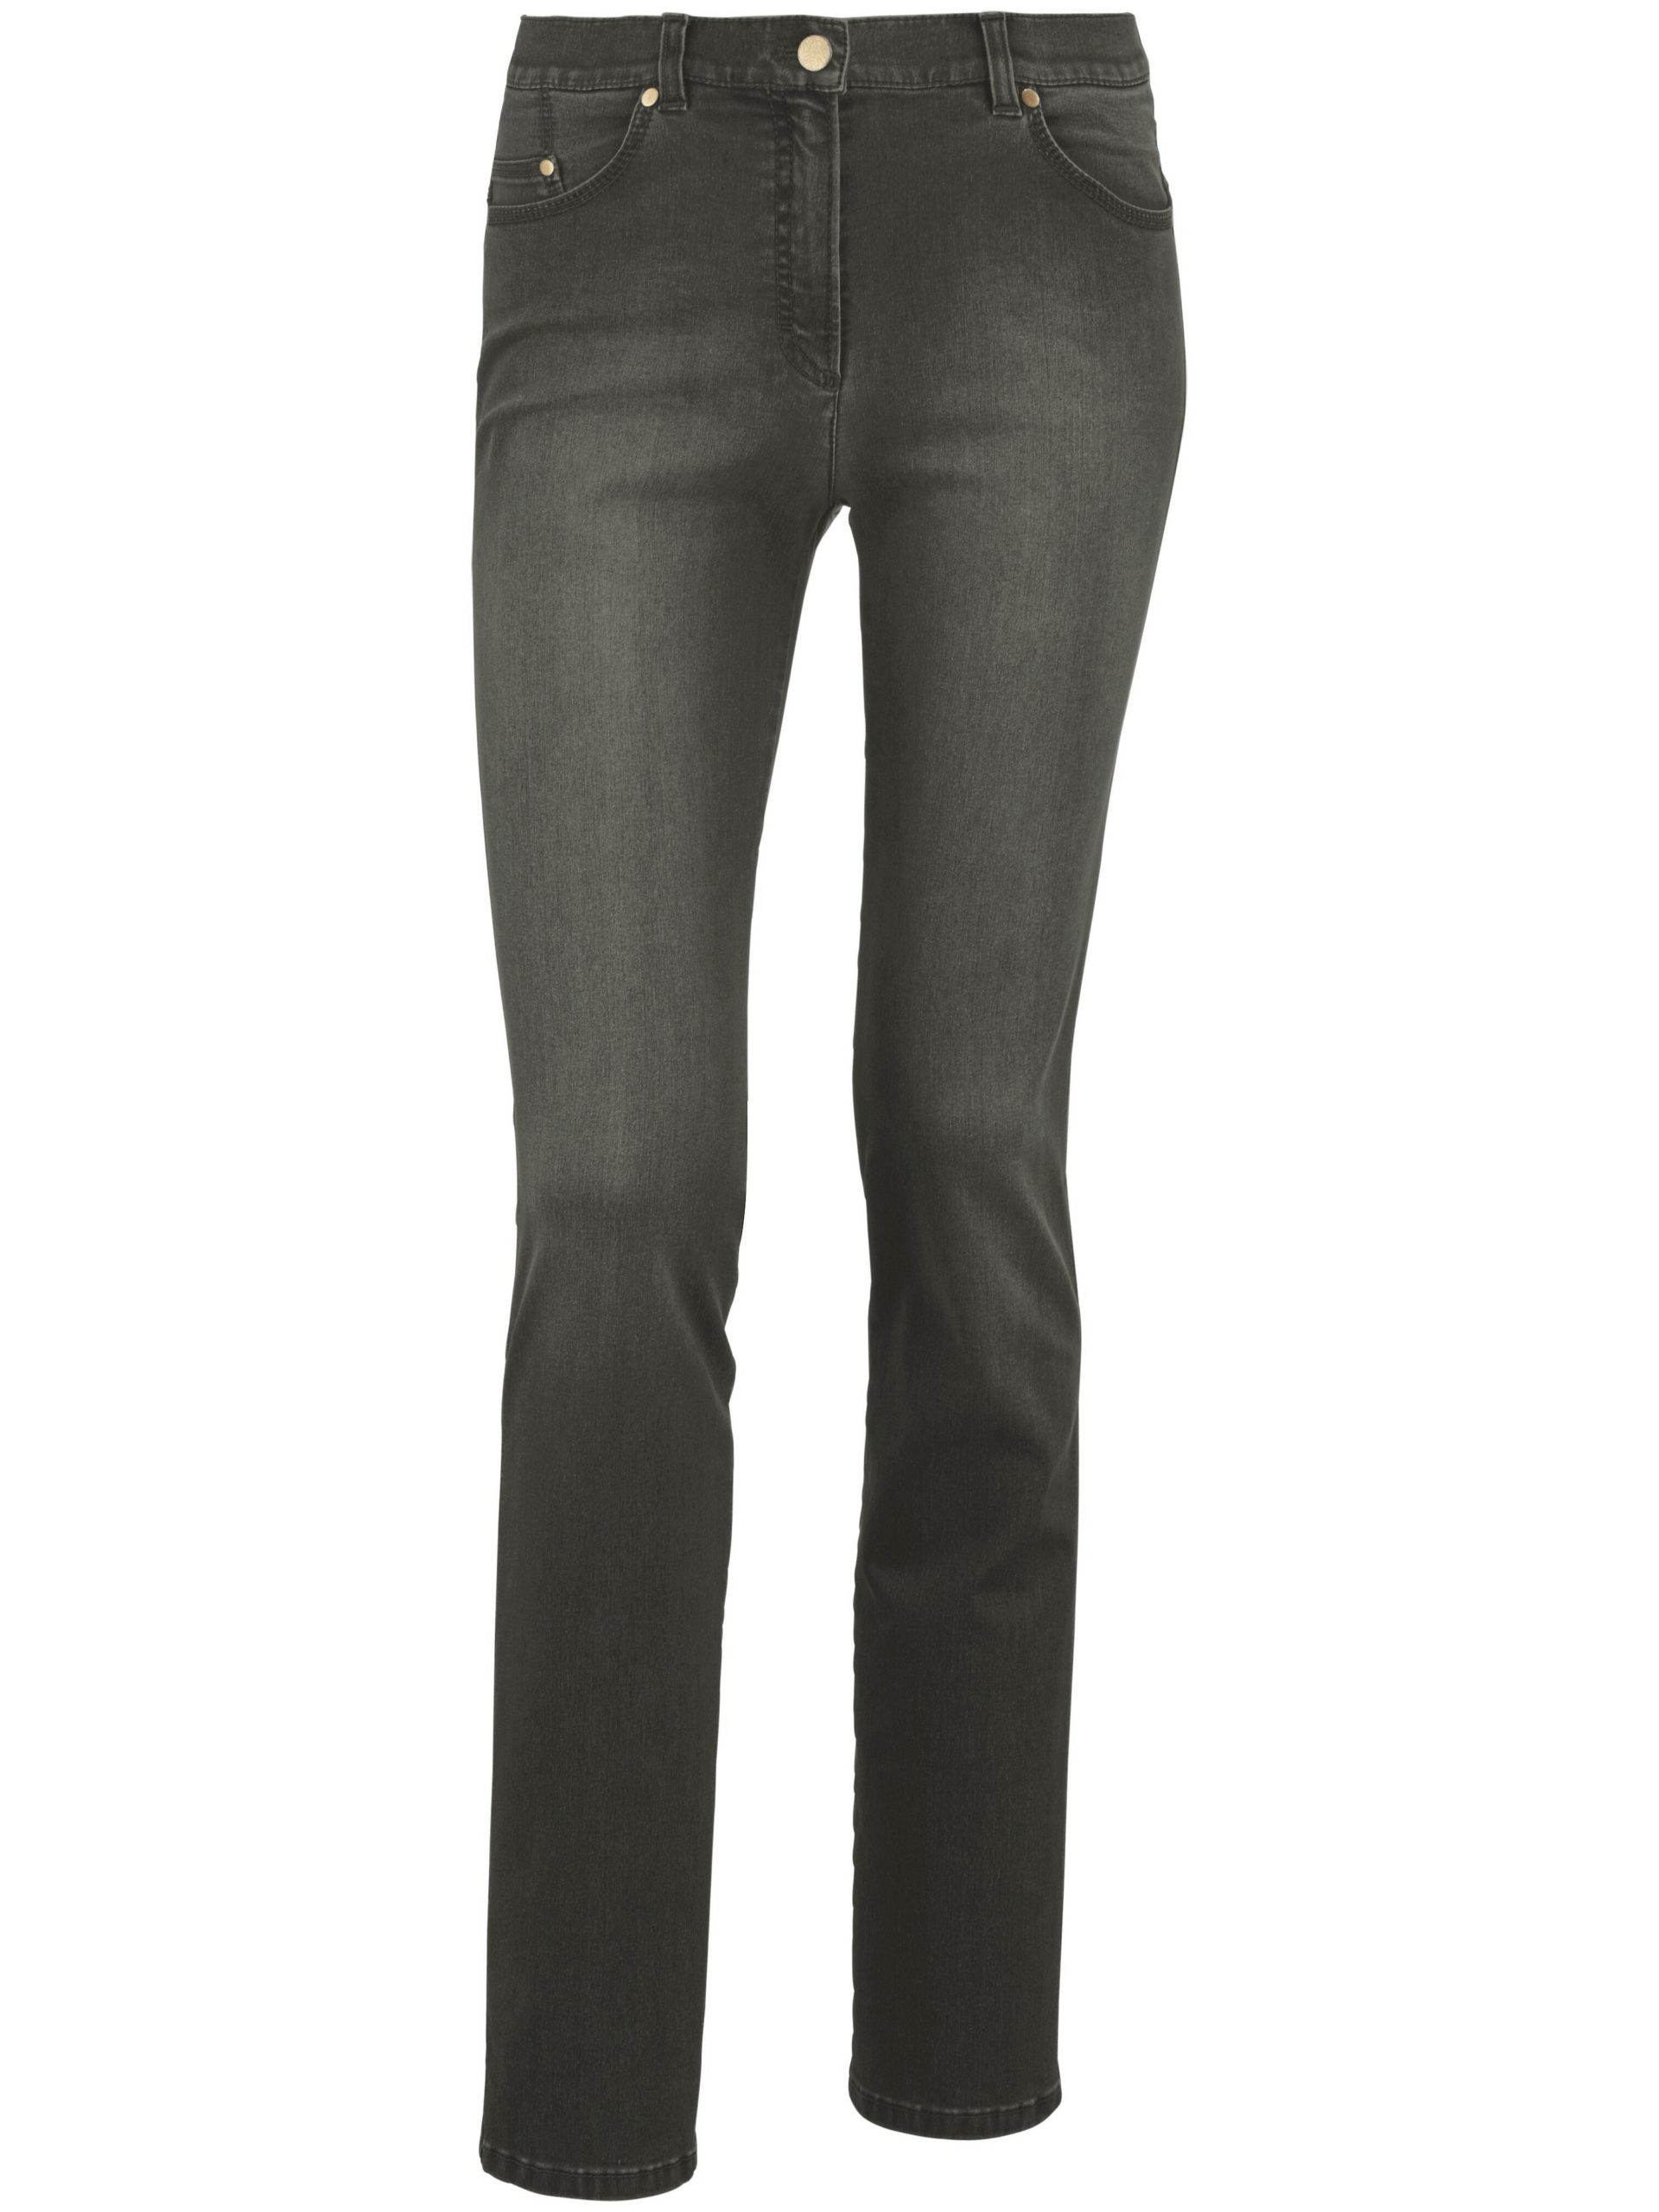 Modellerende Proform S Super Slim-jeans model Lea Van Raphaela by Brax denim Kopen